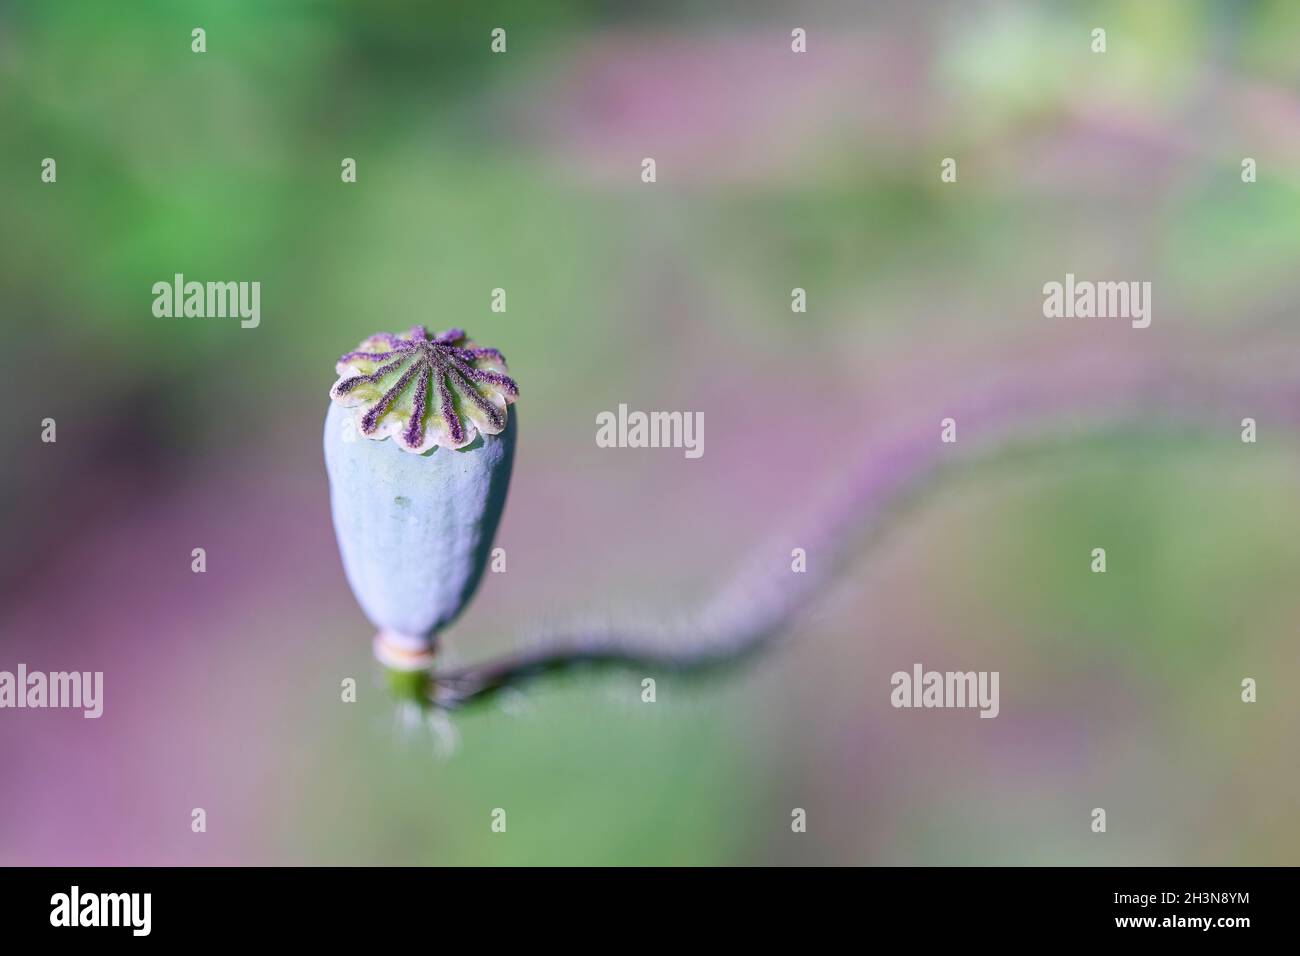 Samenkapsel einer Mohnblume auf einem Feld Stockfoto